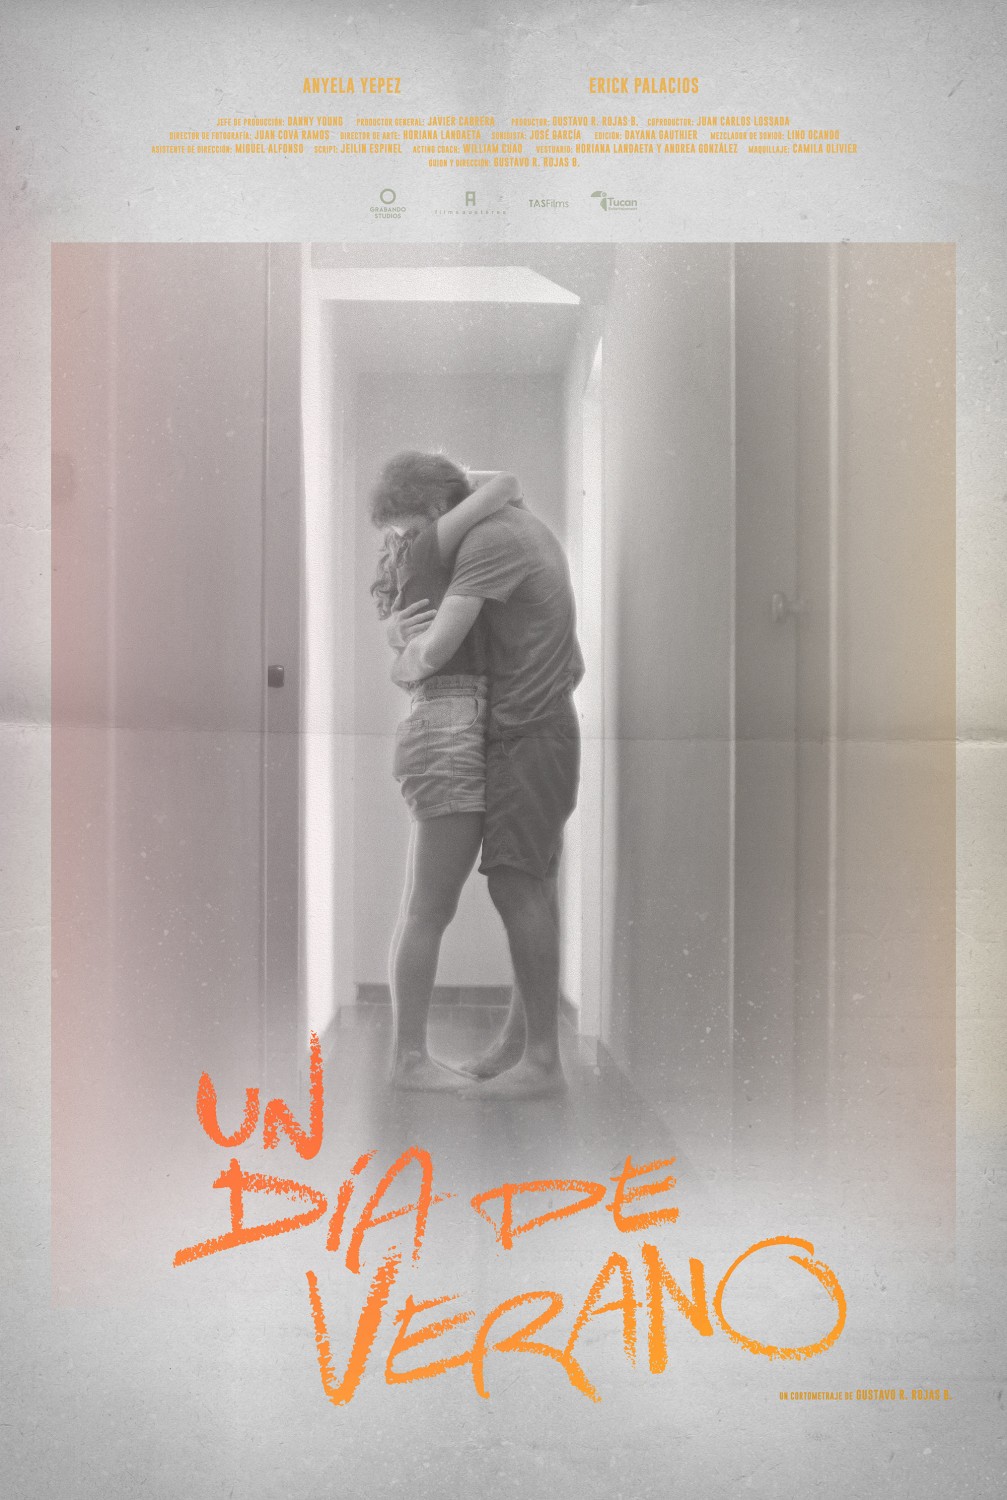 Extra Large Movie Poster Image for Un Da de Verano